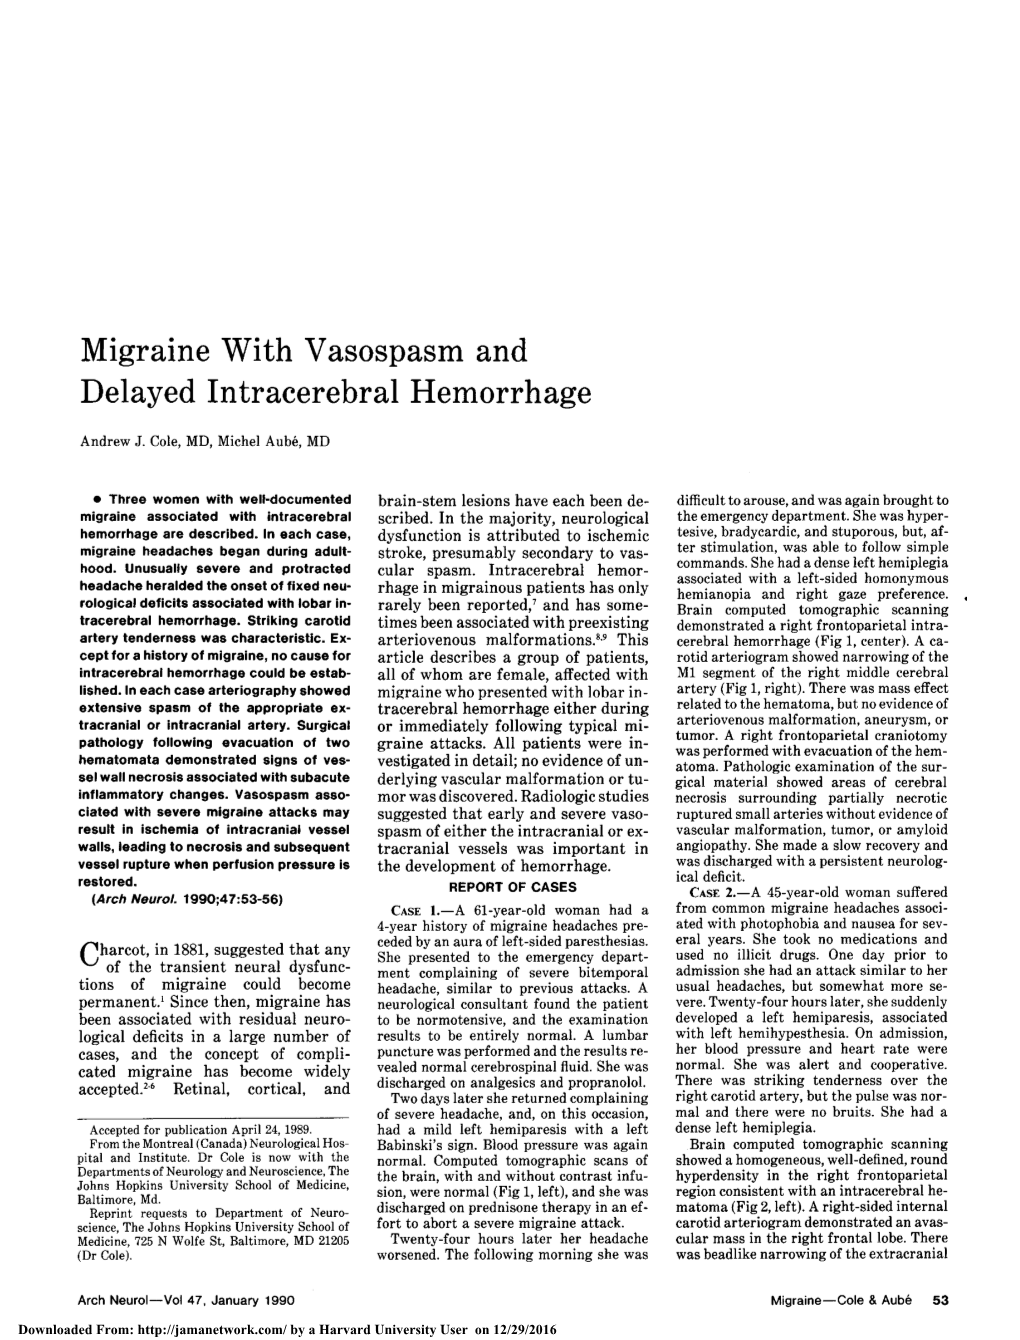 Migraine with Vasospasm and Delayed Intracerebral Hemorrhage